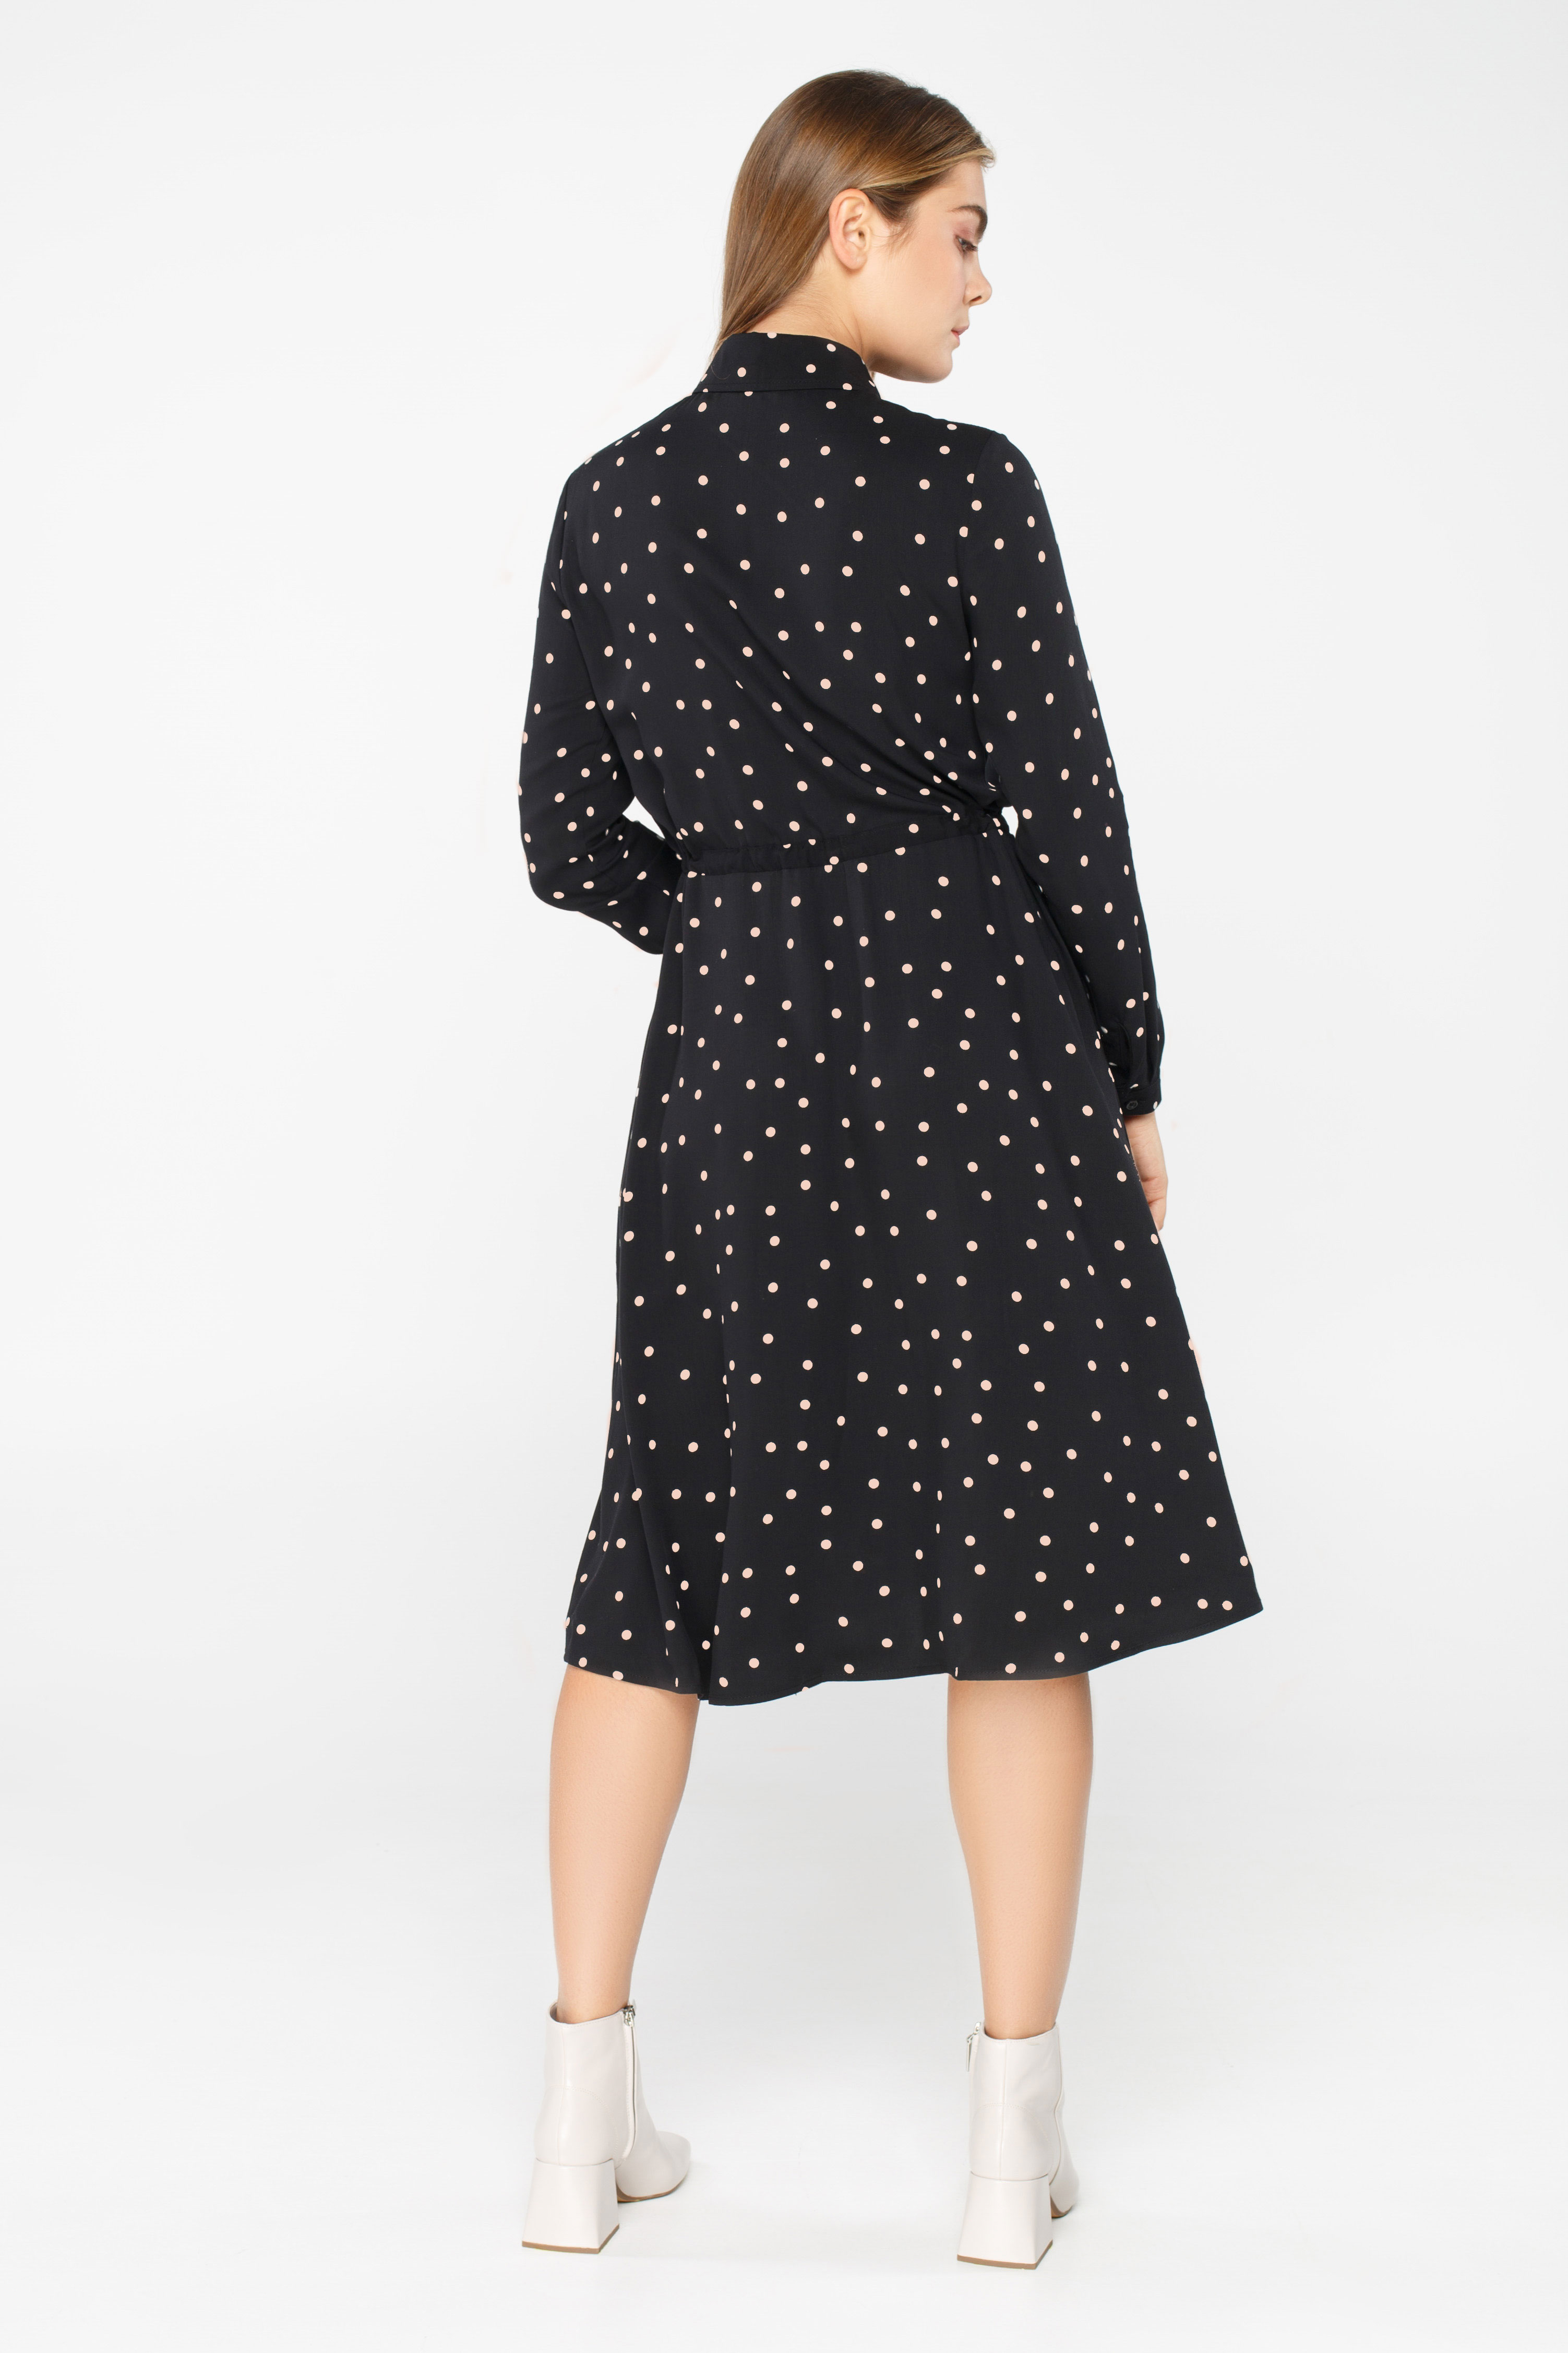 Black polka dot shirt dress below the knee, photo 5